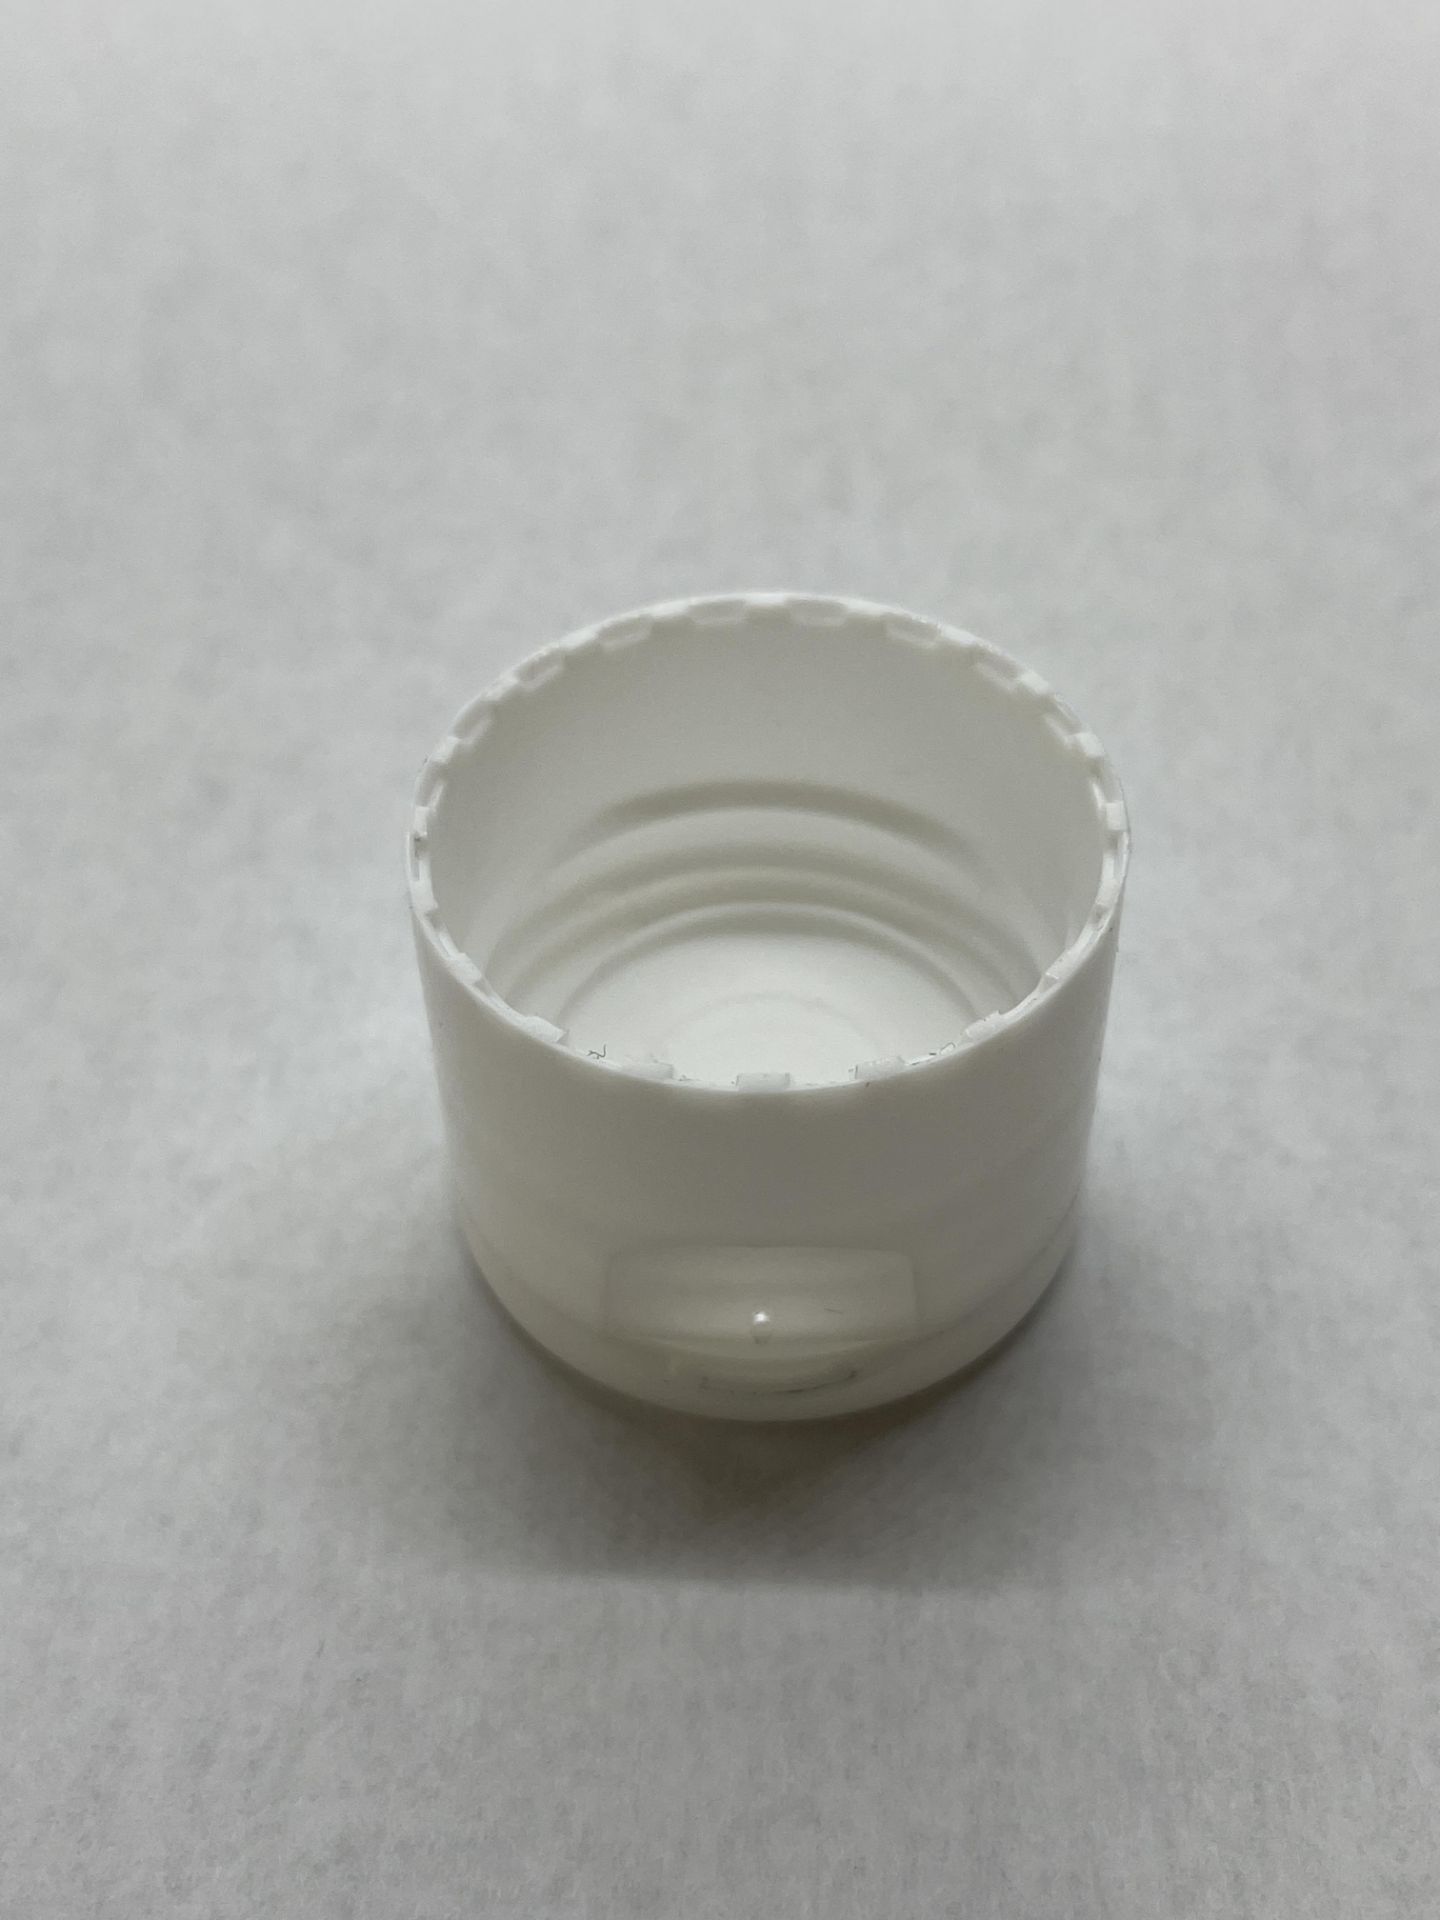 74,000 - White Clip Bottle Cap that fits 16oz bottle, 28-410 Threading - Image 3 of 3